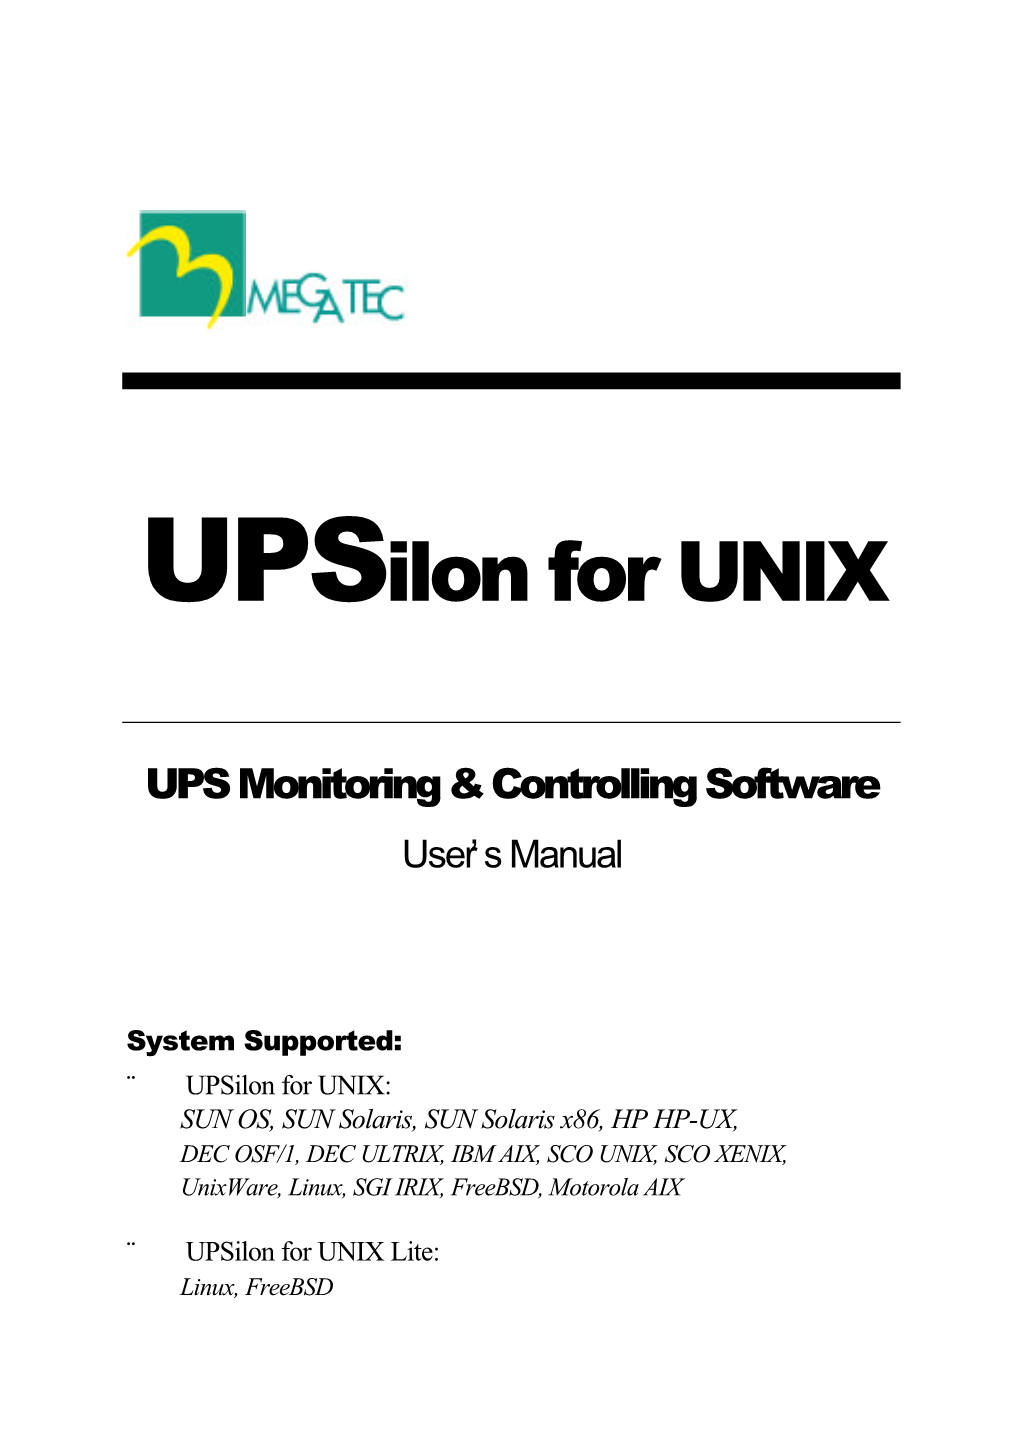 Upsilon for UNIX